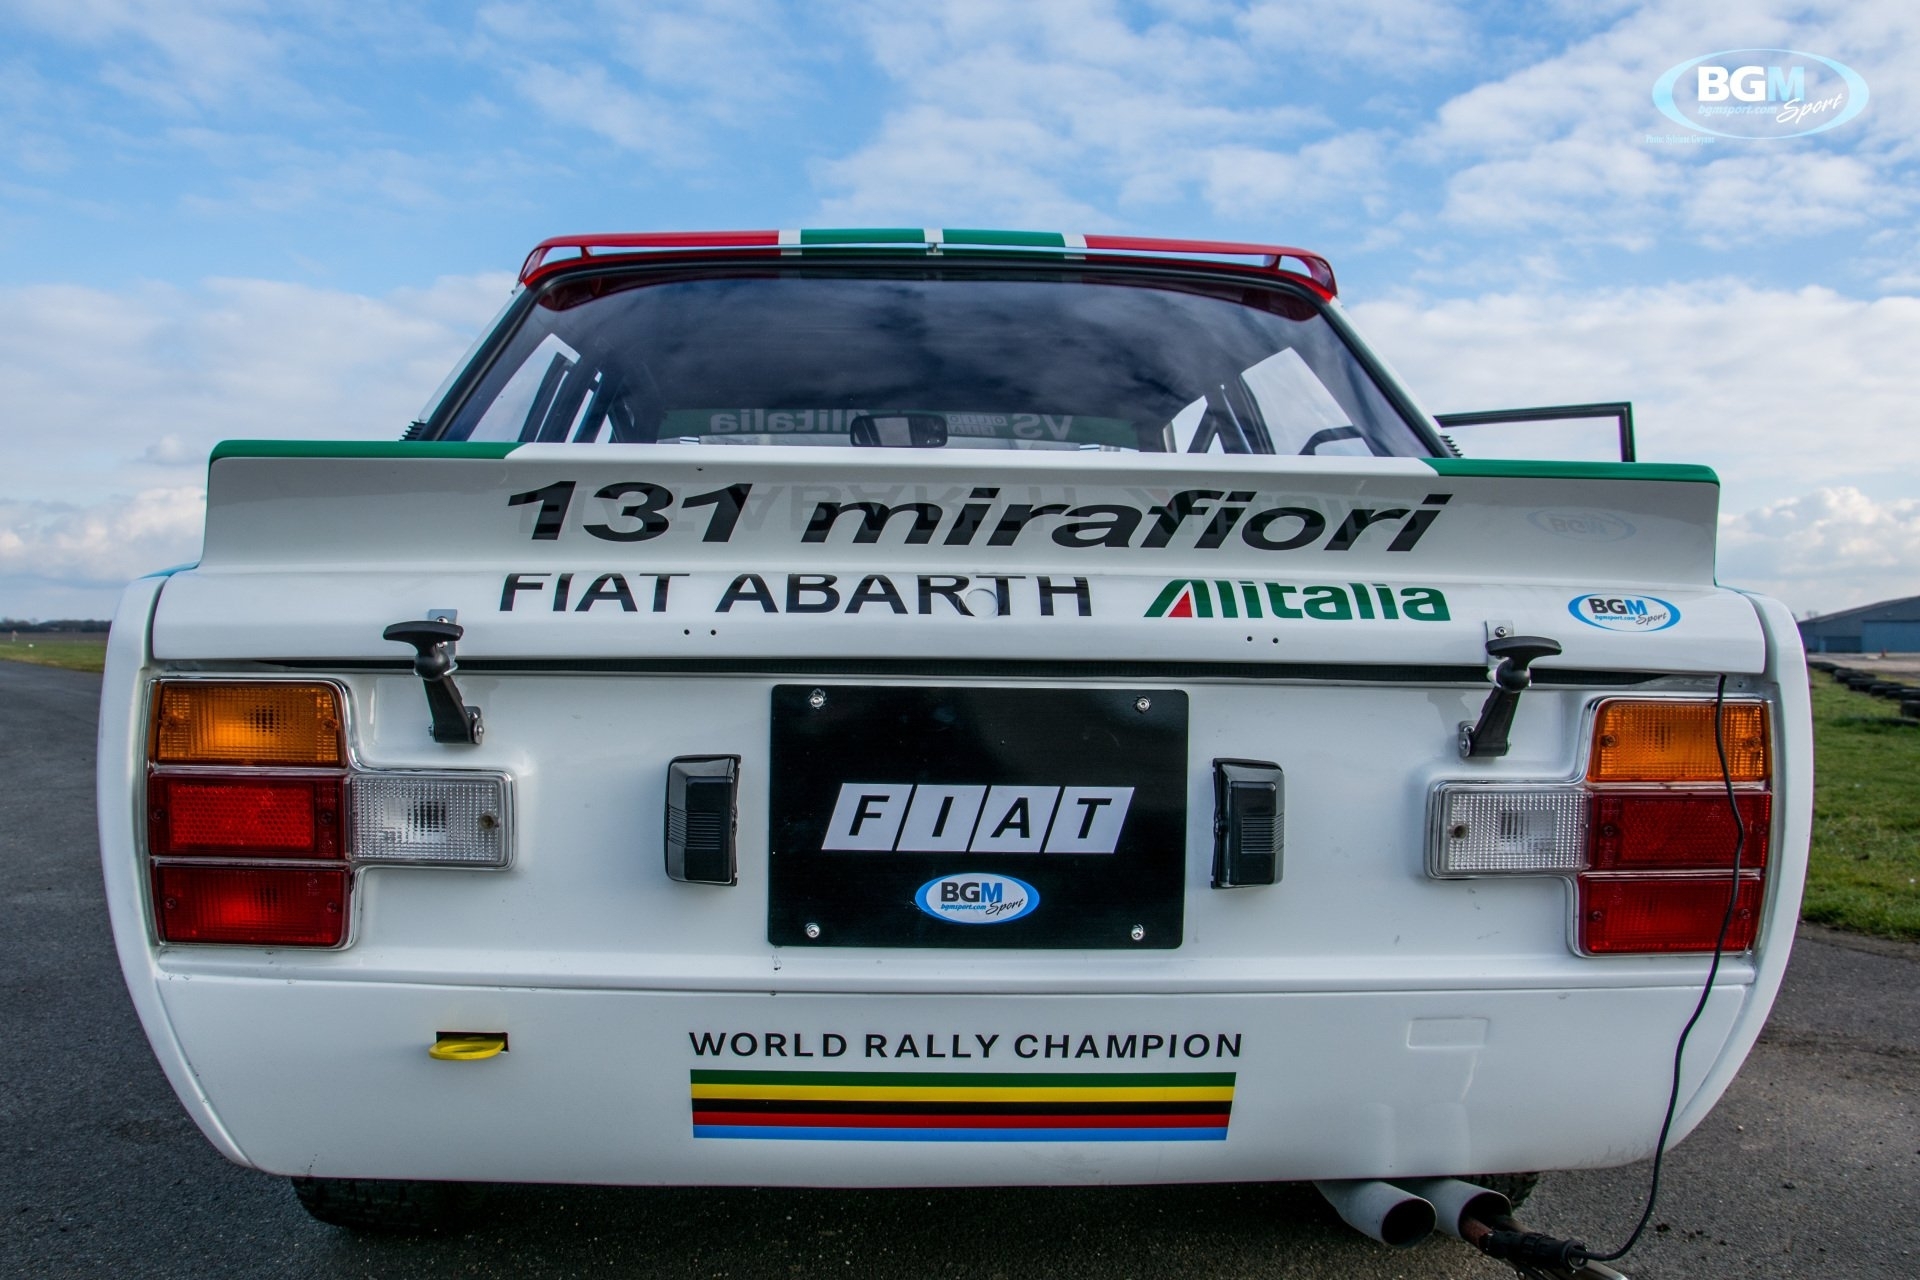 fiat-131-abarth-grp-4-rally-car-41-small